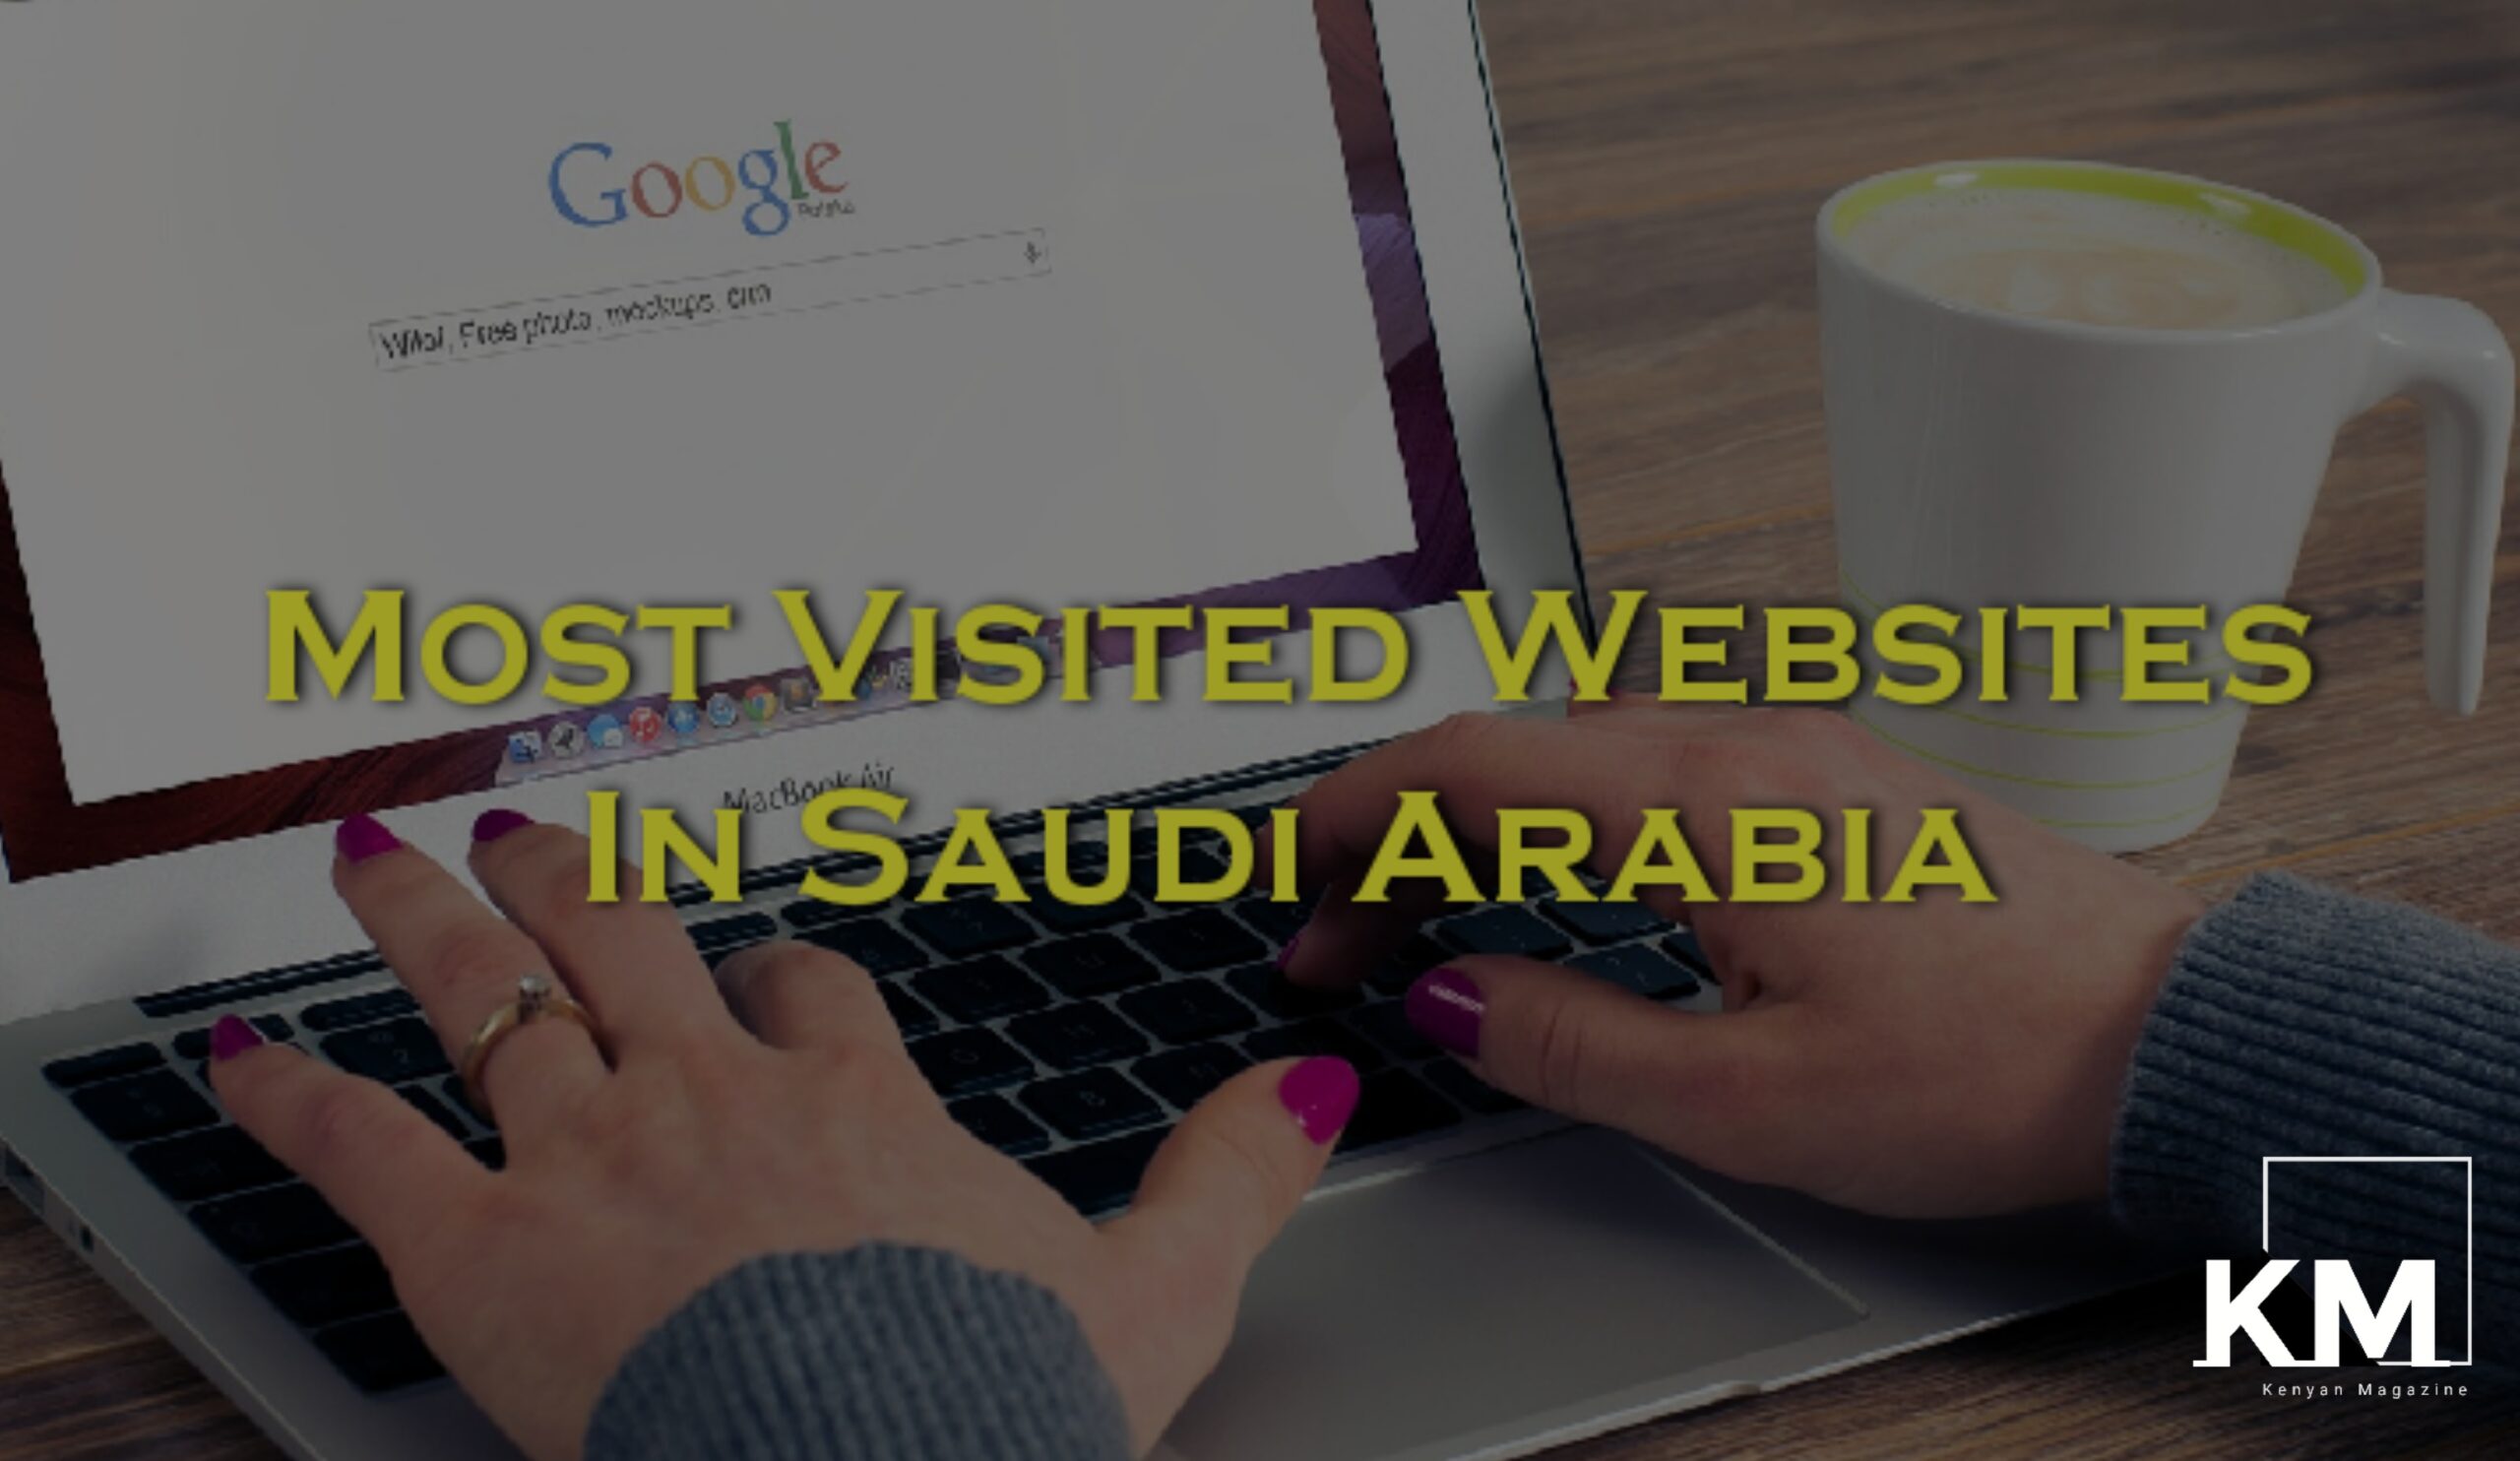 Most visited websites in Saudi Arabia